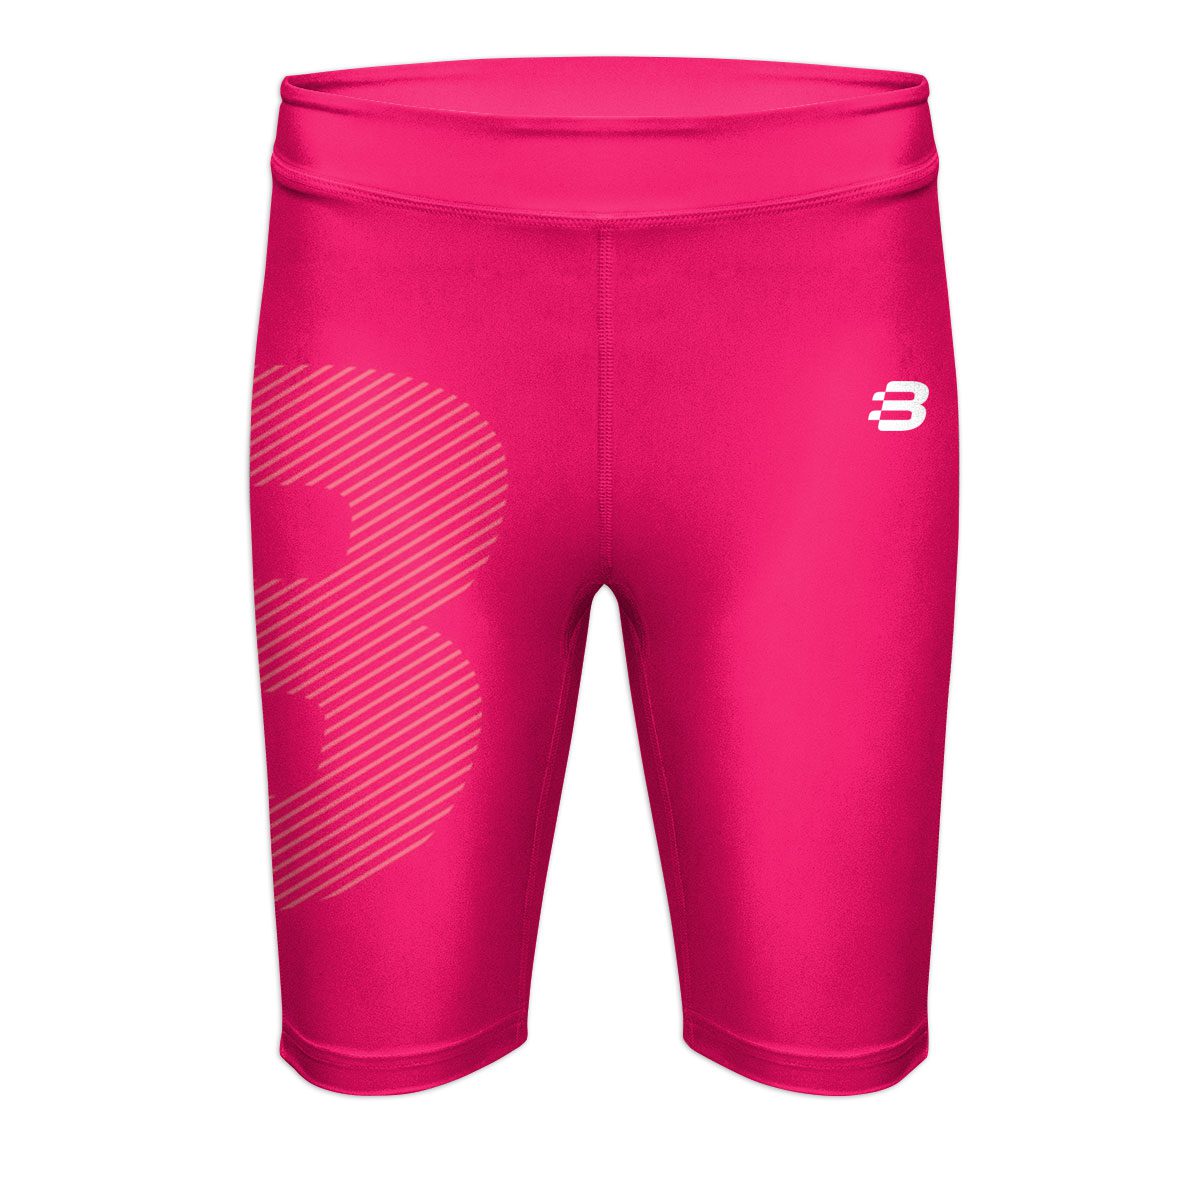 14 Best Pink Compression Shorts For 2023